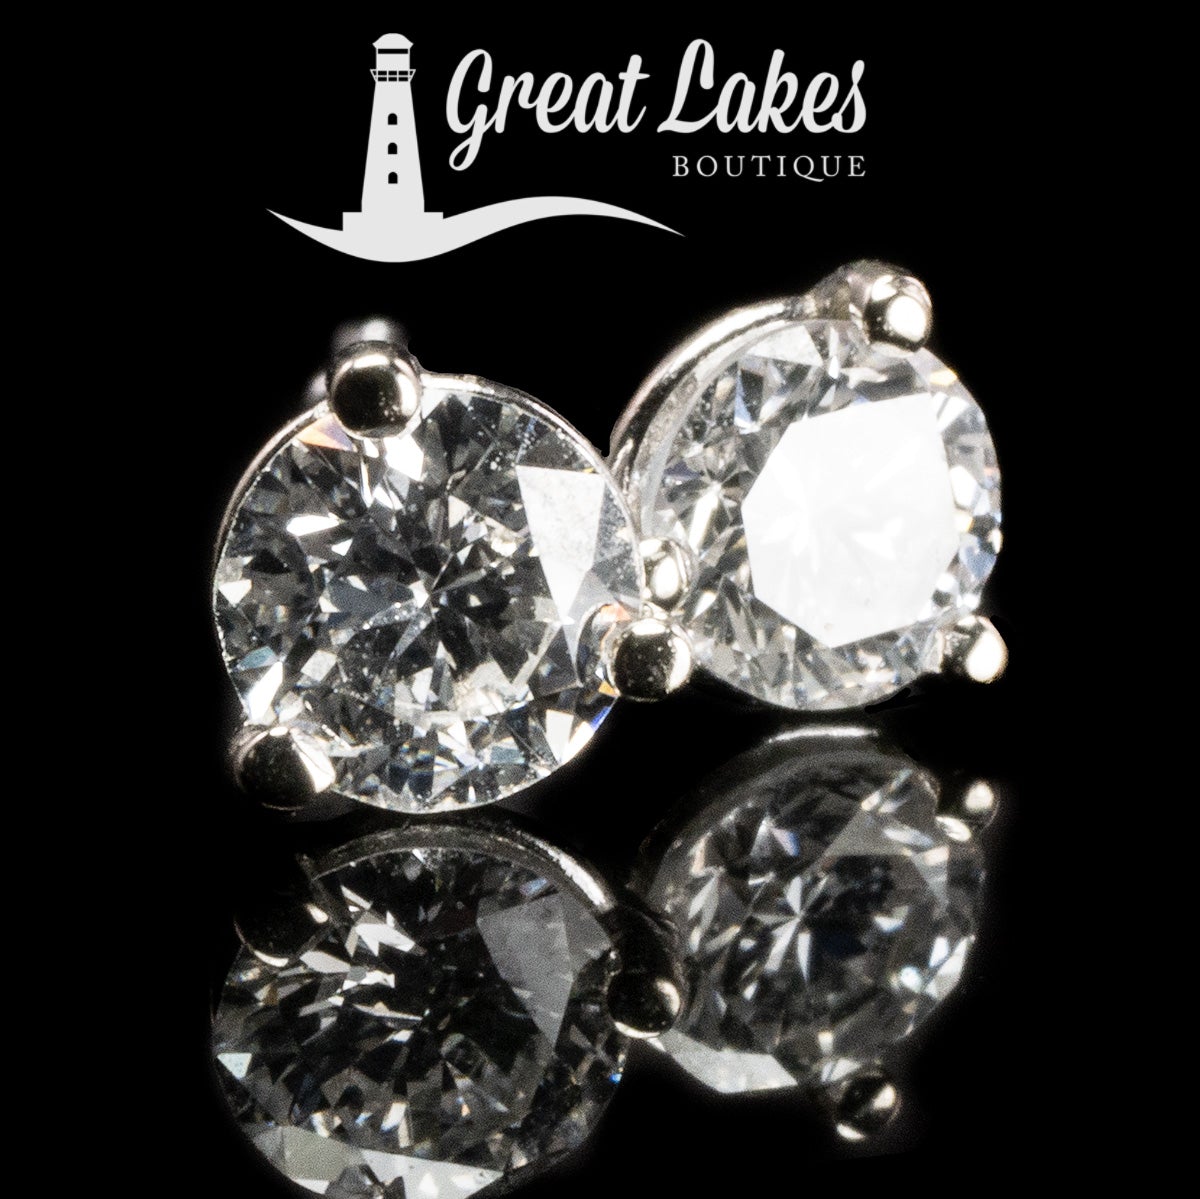 Great Lakes Boutique White Gold Diamond Studs